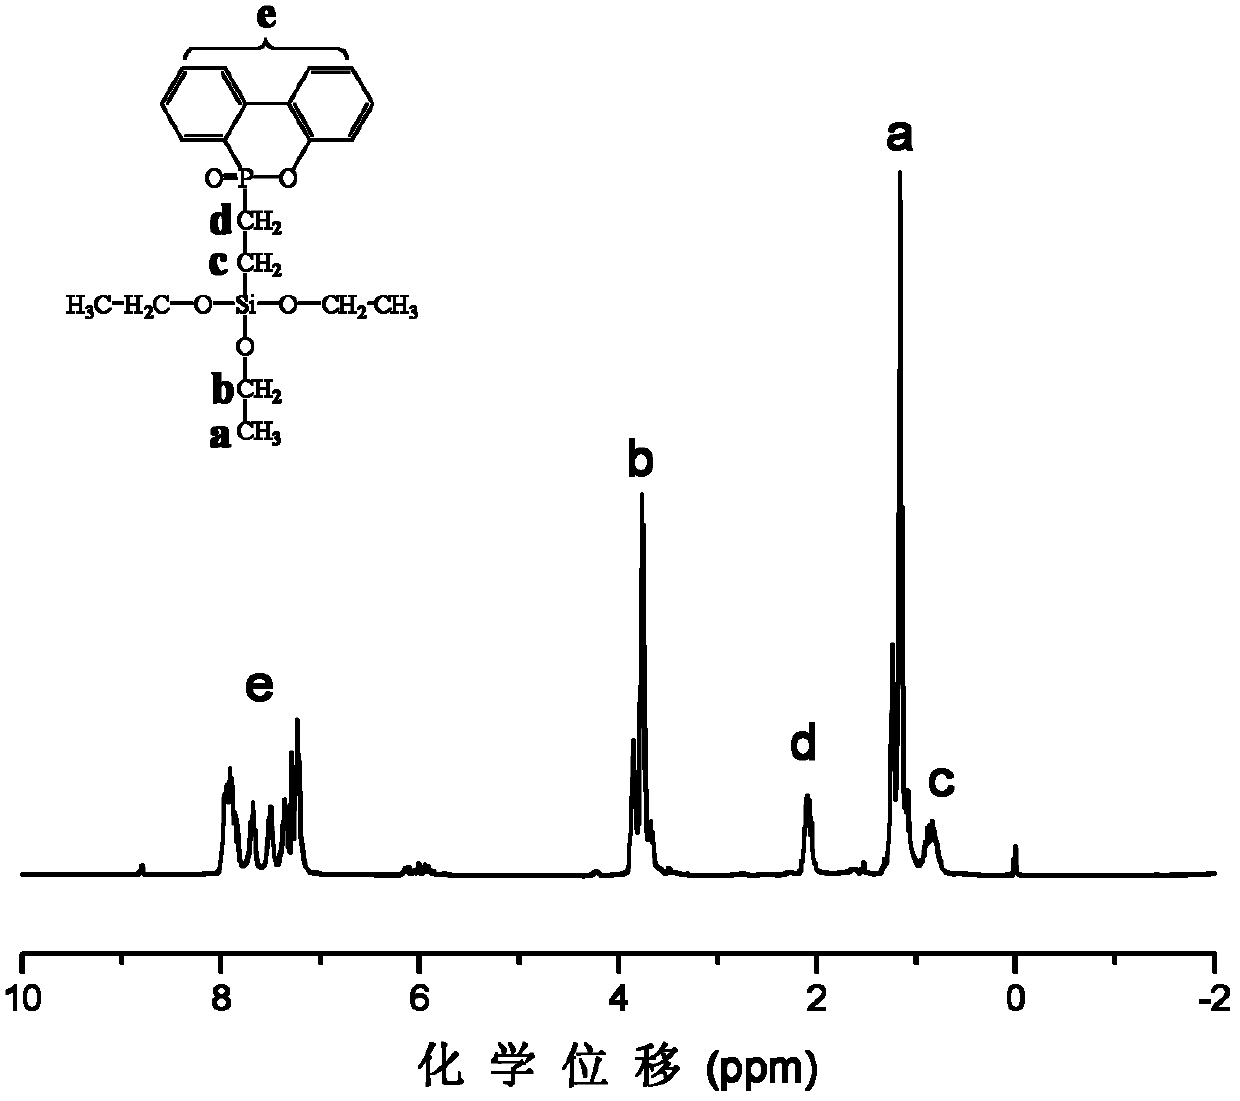 Composition of halogen-free flame-retardant ethylene/vinyl acetate copolymer of phosphorus-containing heterocyclic compound